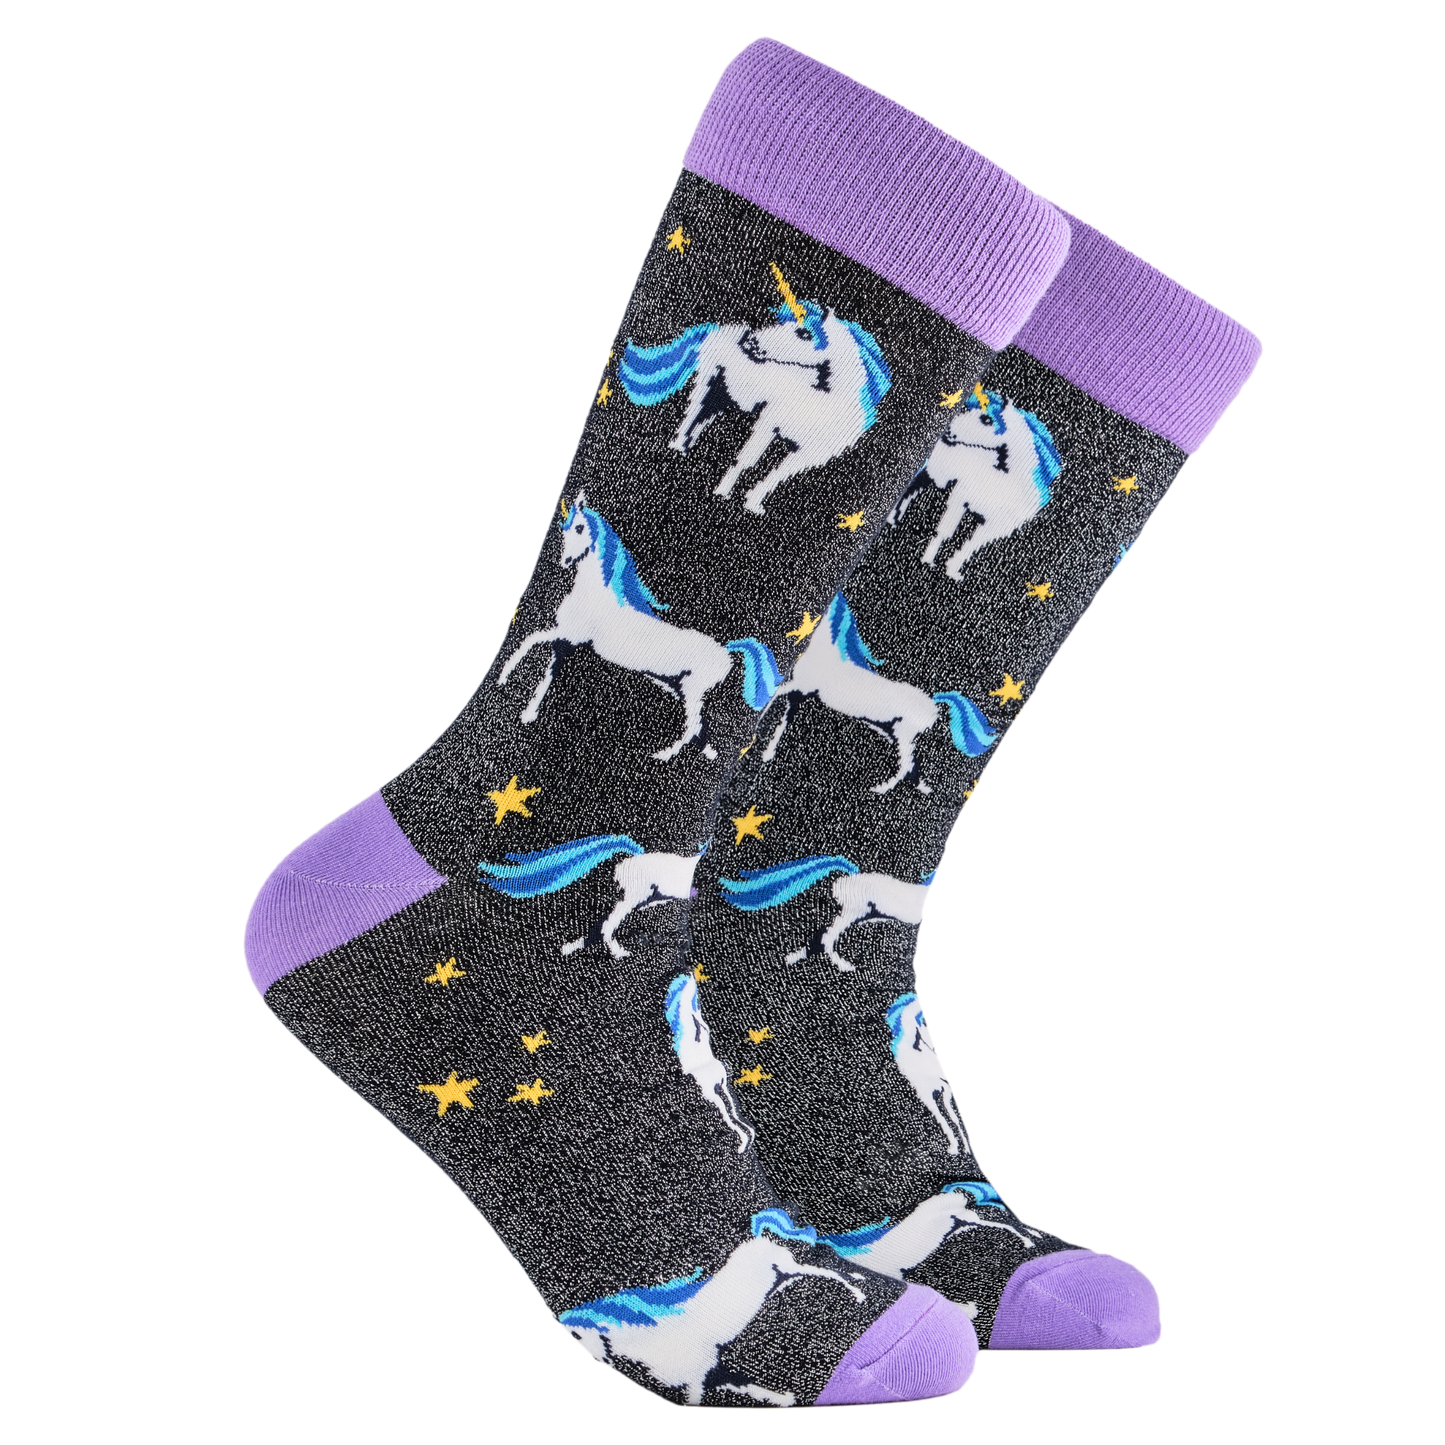 A pair of socks depicting unicorns. Glittery black legs, purple cuff, heel and toe.